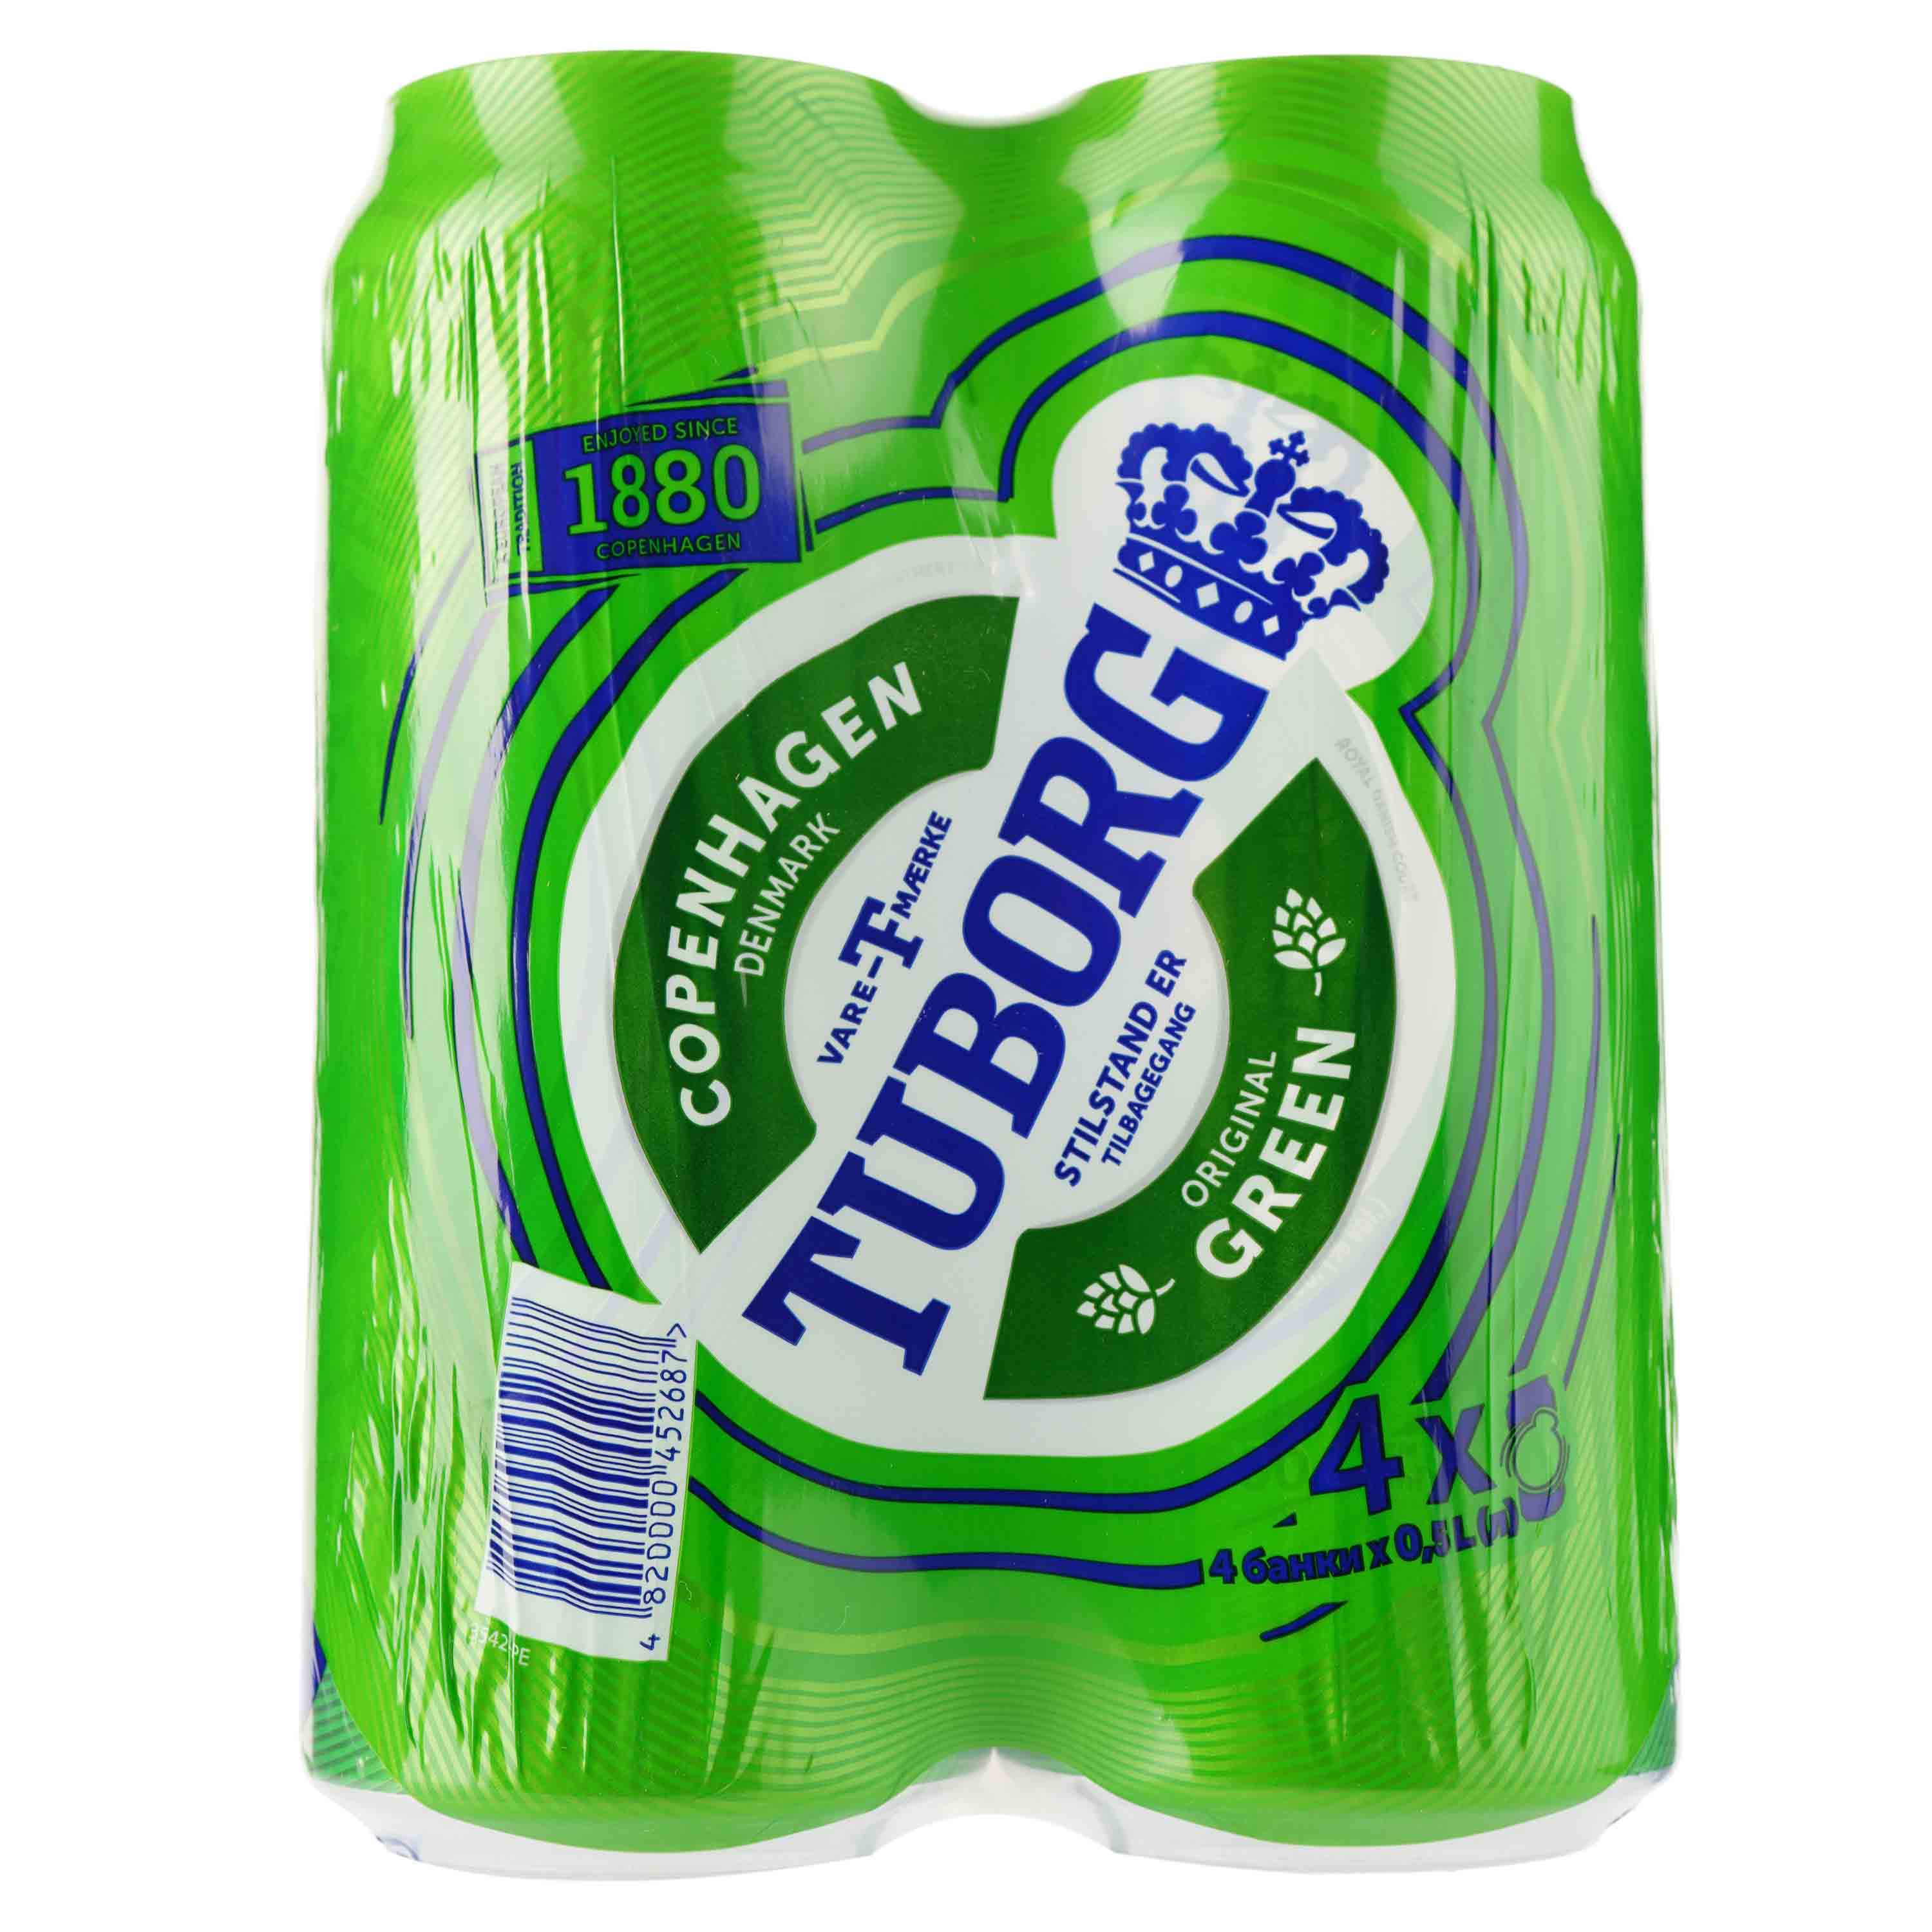 Пиво Tuborg Green, светлое, 4,6%, ж/б, 2 л (4 шт. по 0,5 л) (224869) - фото 1